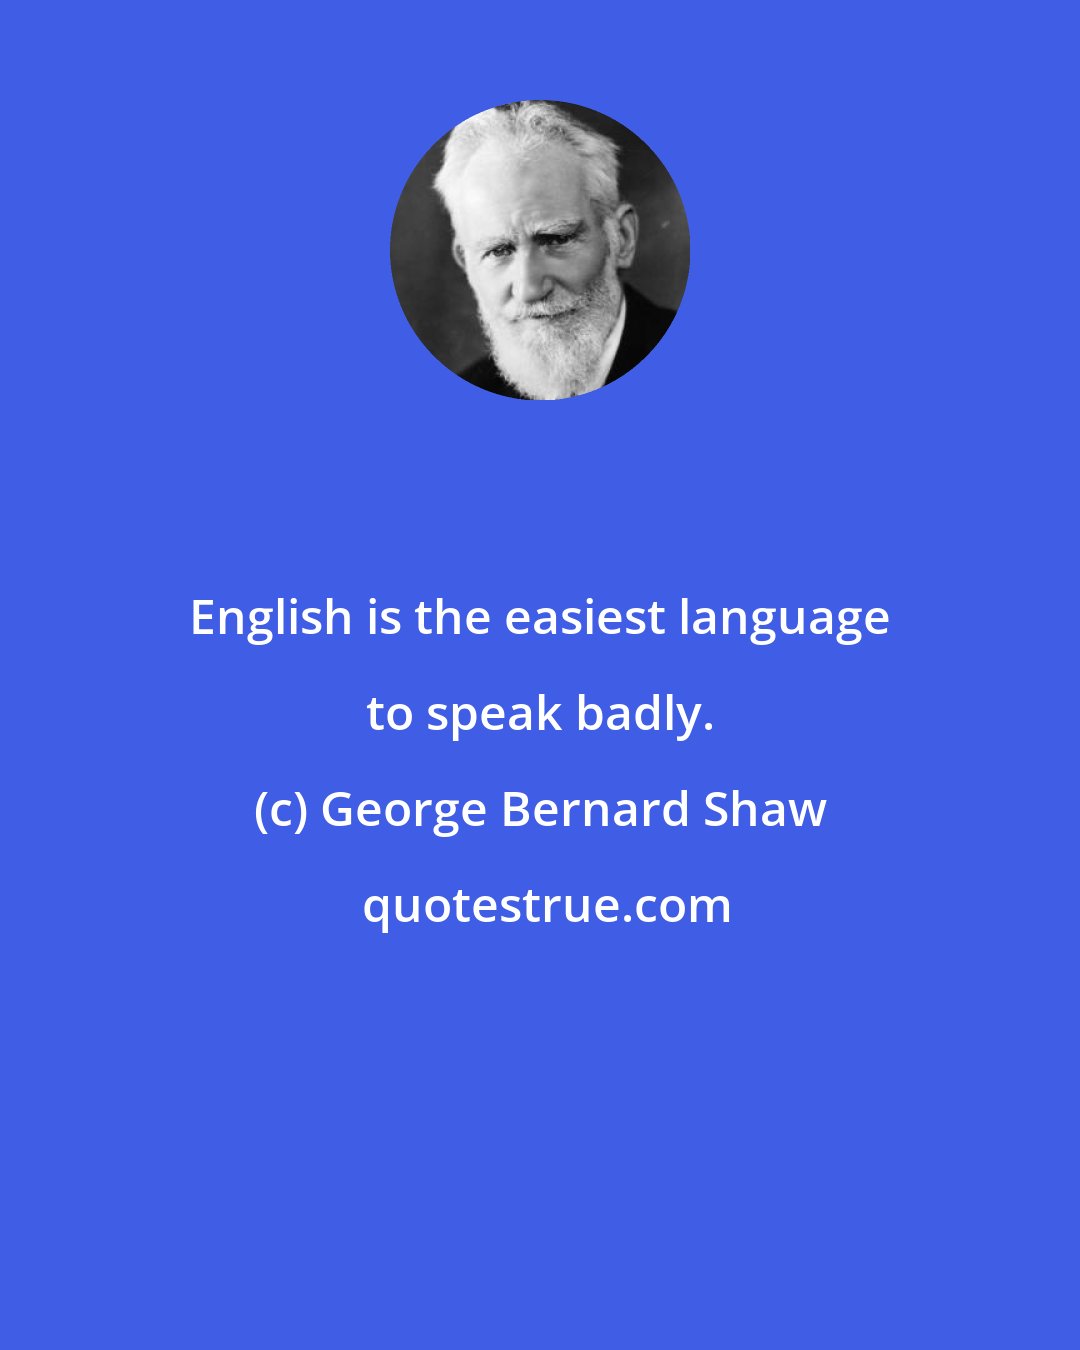 George Bernard Shaw: English is the easiest language to speak badly.